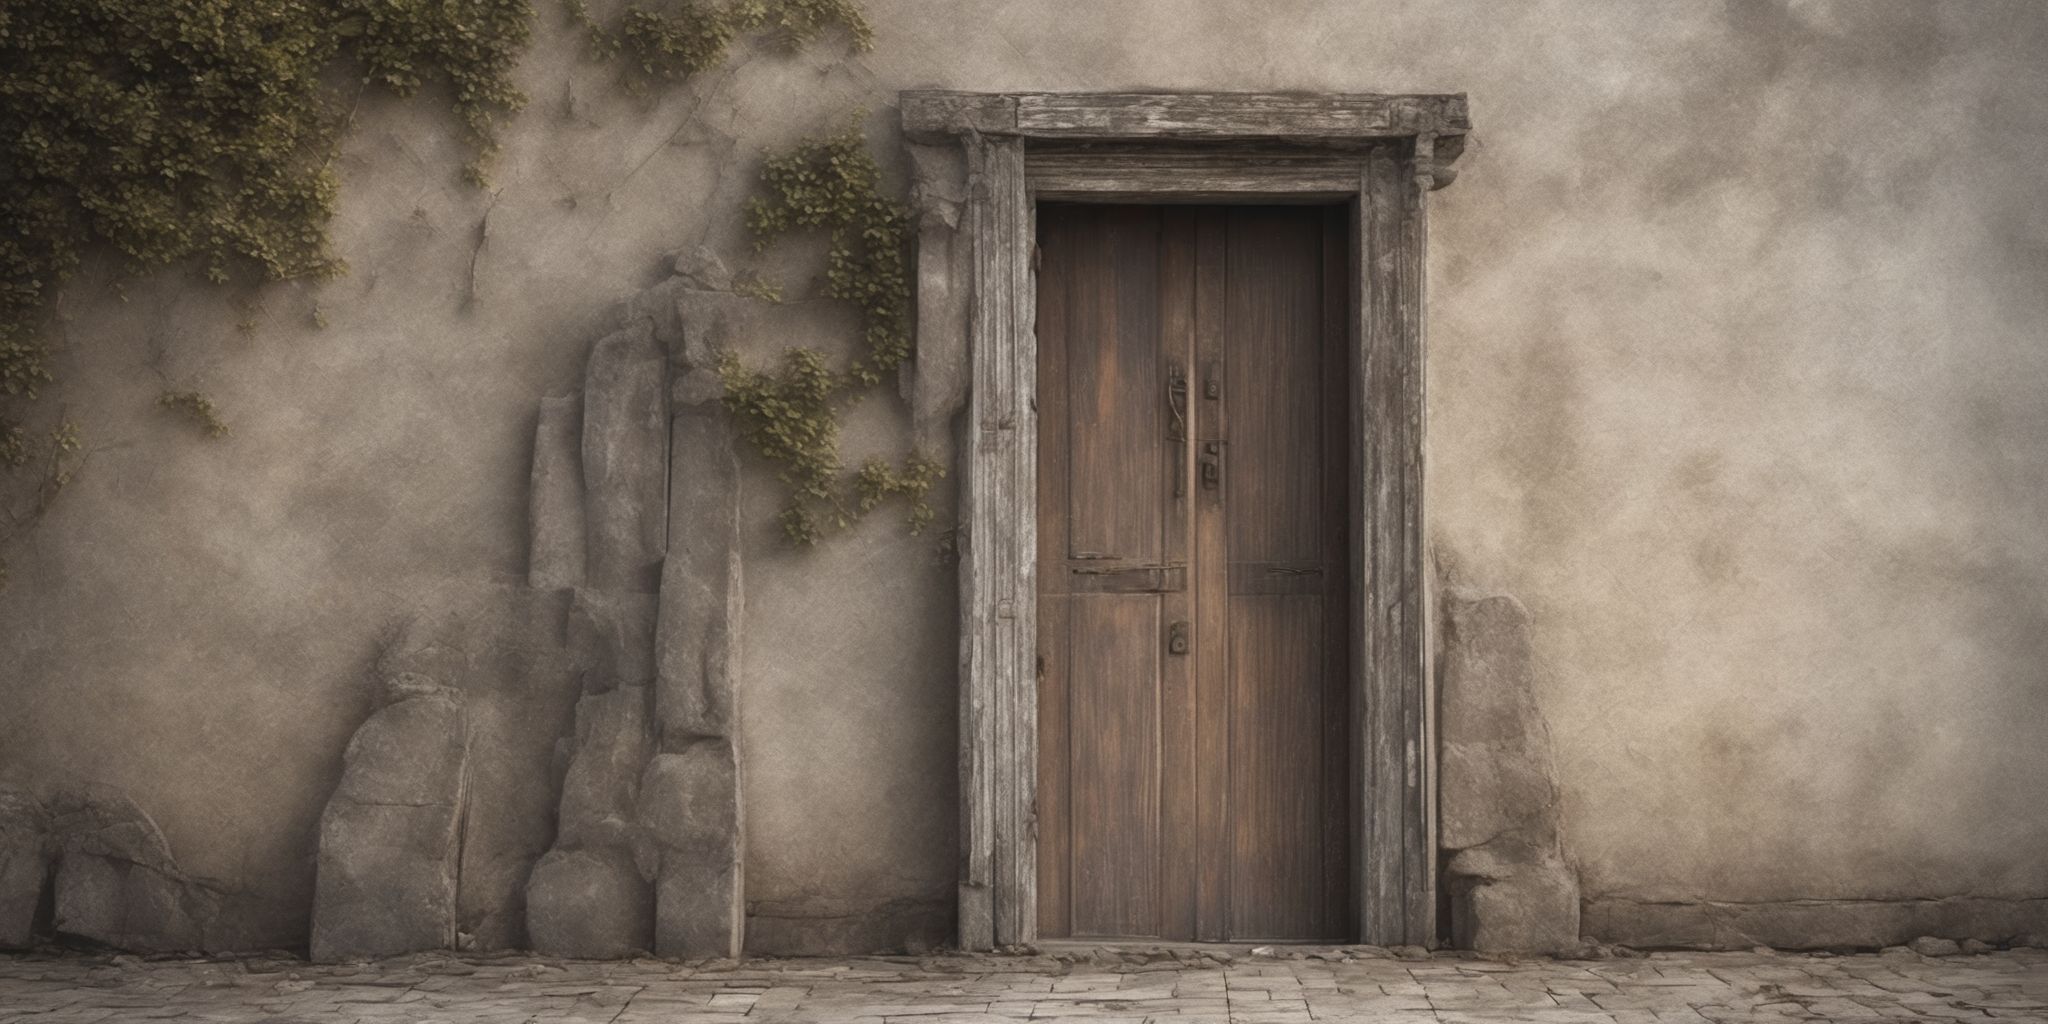 Doorway  in realistic, photographic style